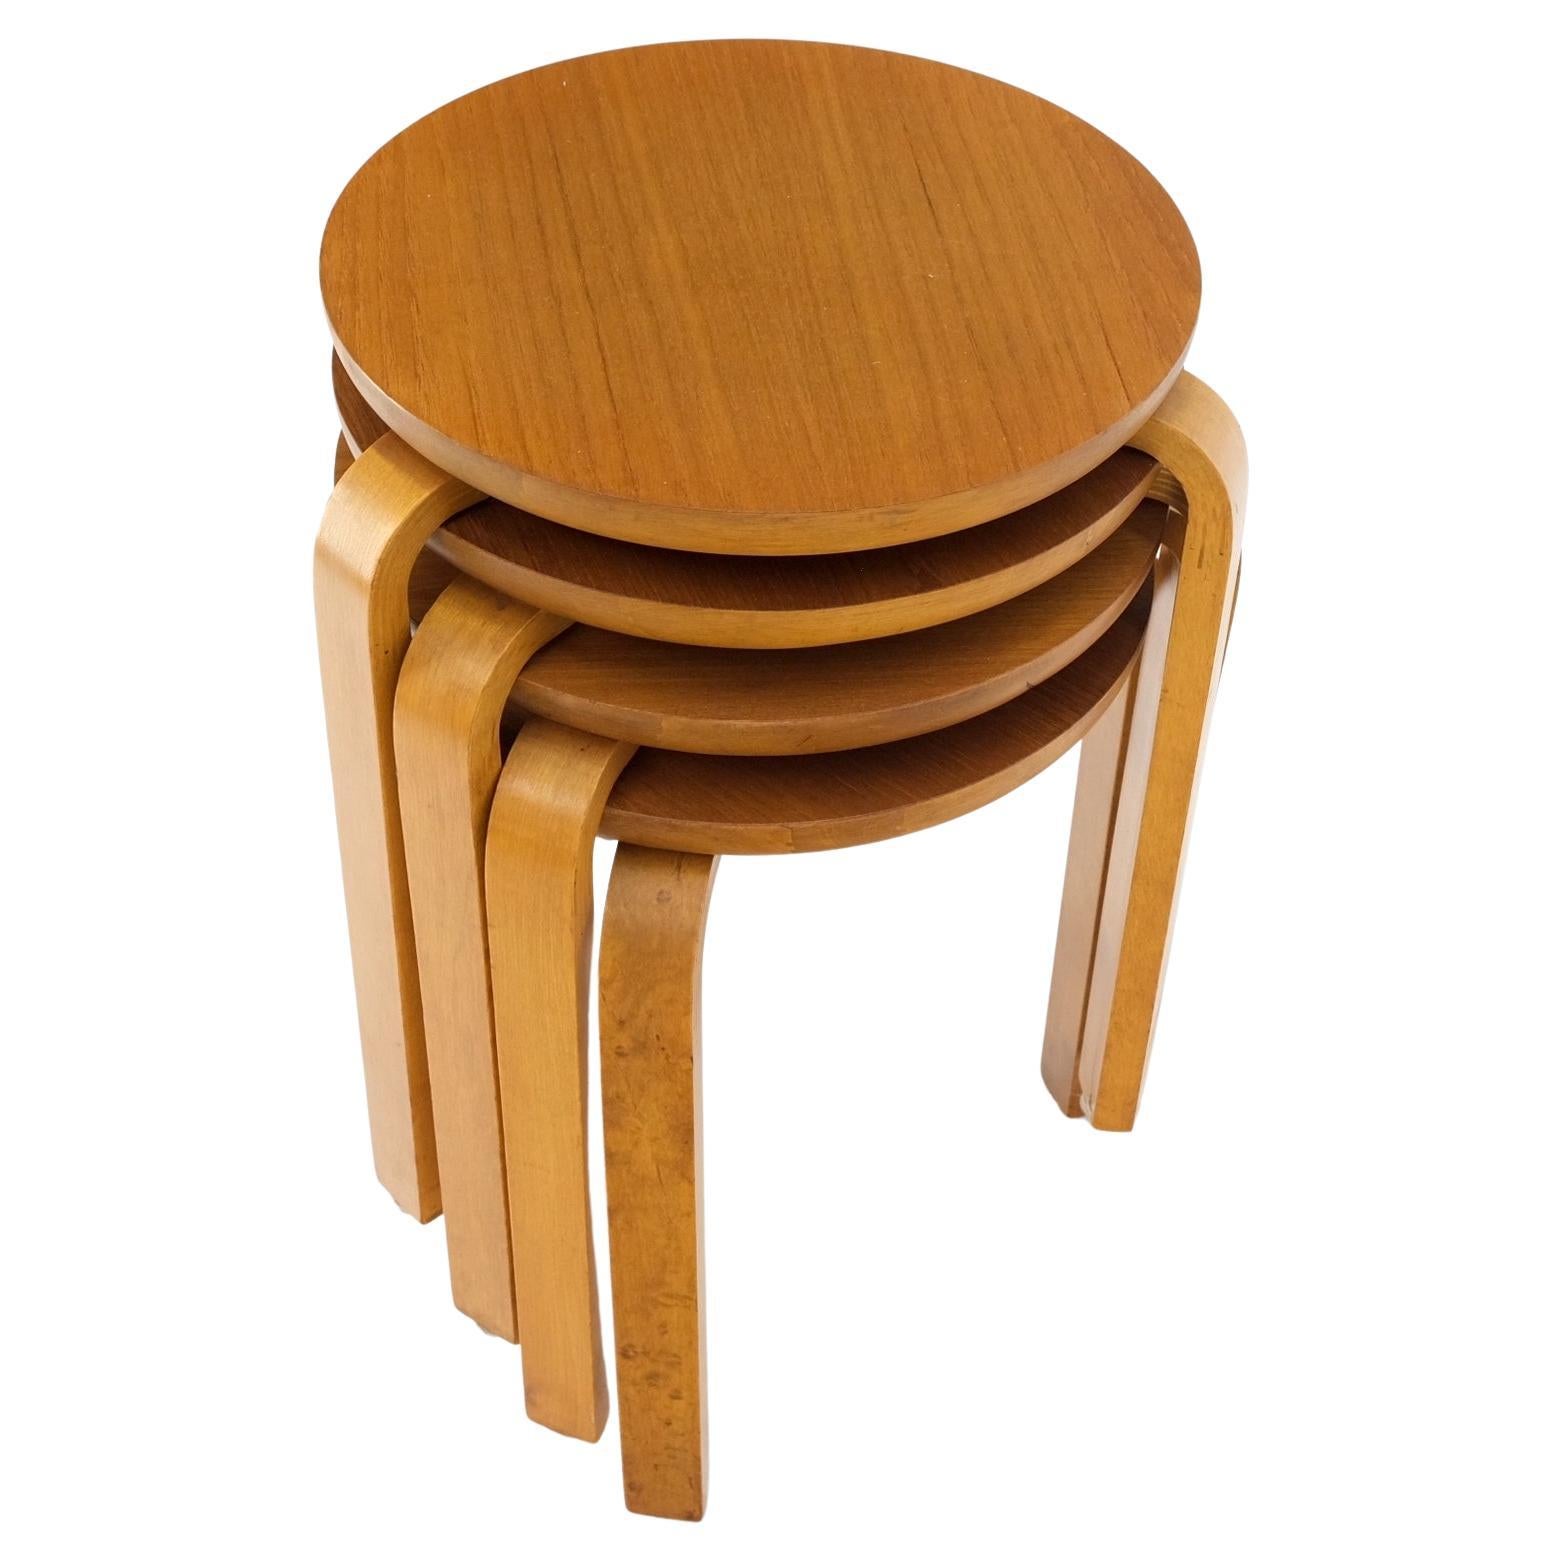 Set of 4 Alvar Aalto round birch bent leg nesting tables c.1950s made in Sweden.
Super clean antique condition.